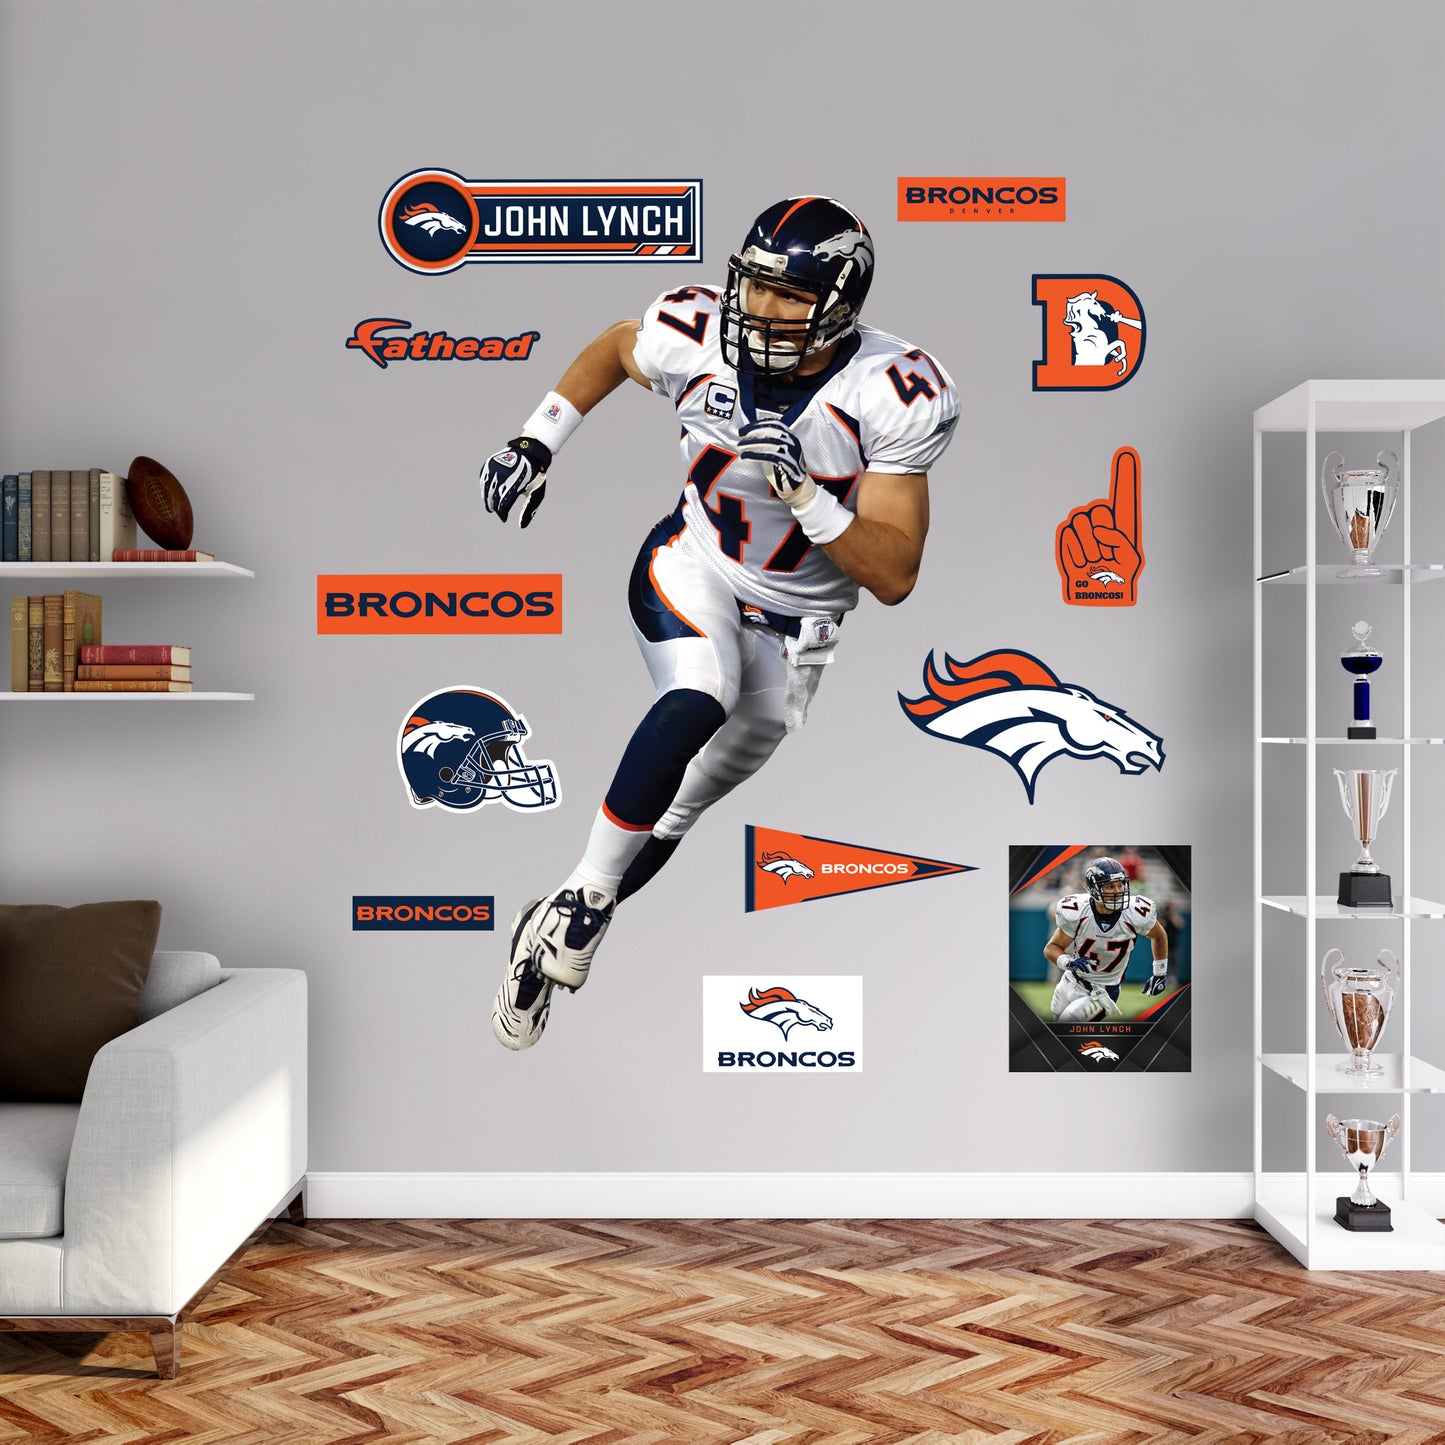 Denver Broncos: John Lynch Legend        - Officially Licensed NFL Removable     Adhesive Decal